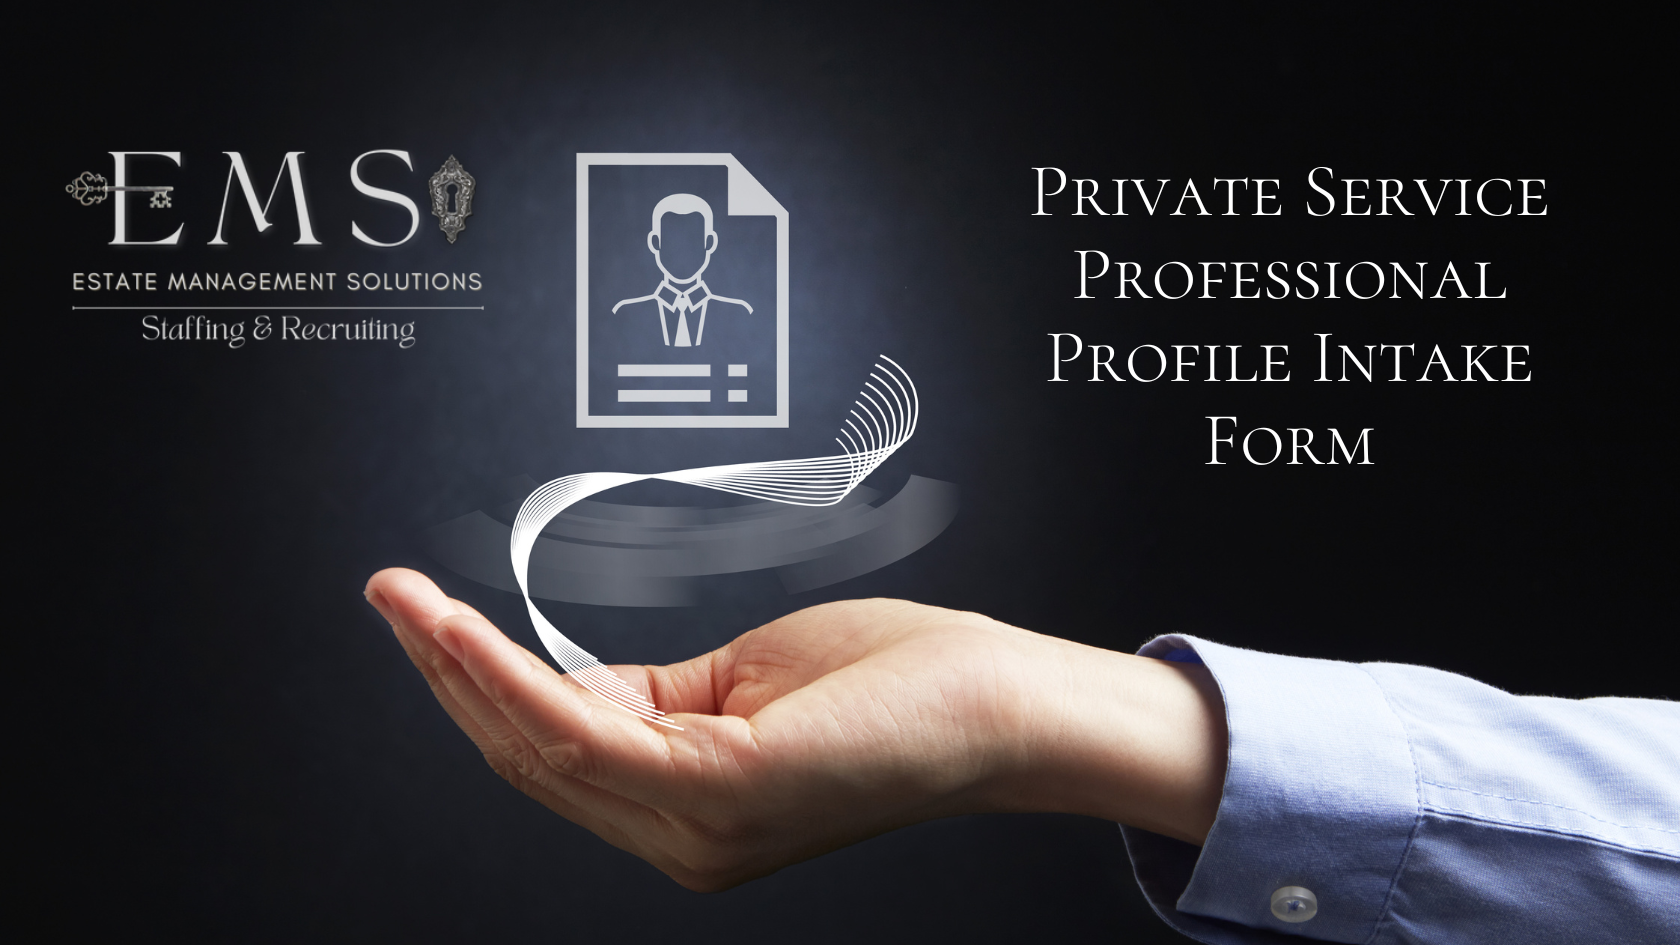 Private Service Professional Profile Intake Form Banner Image